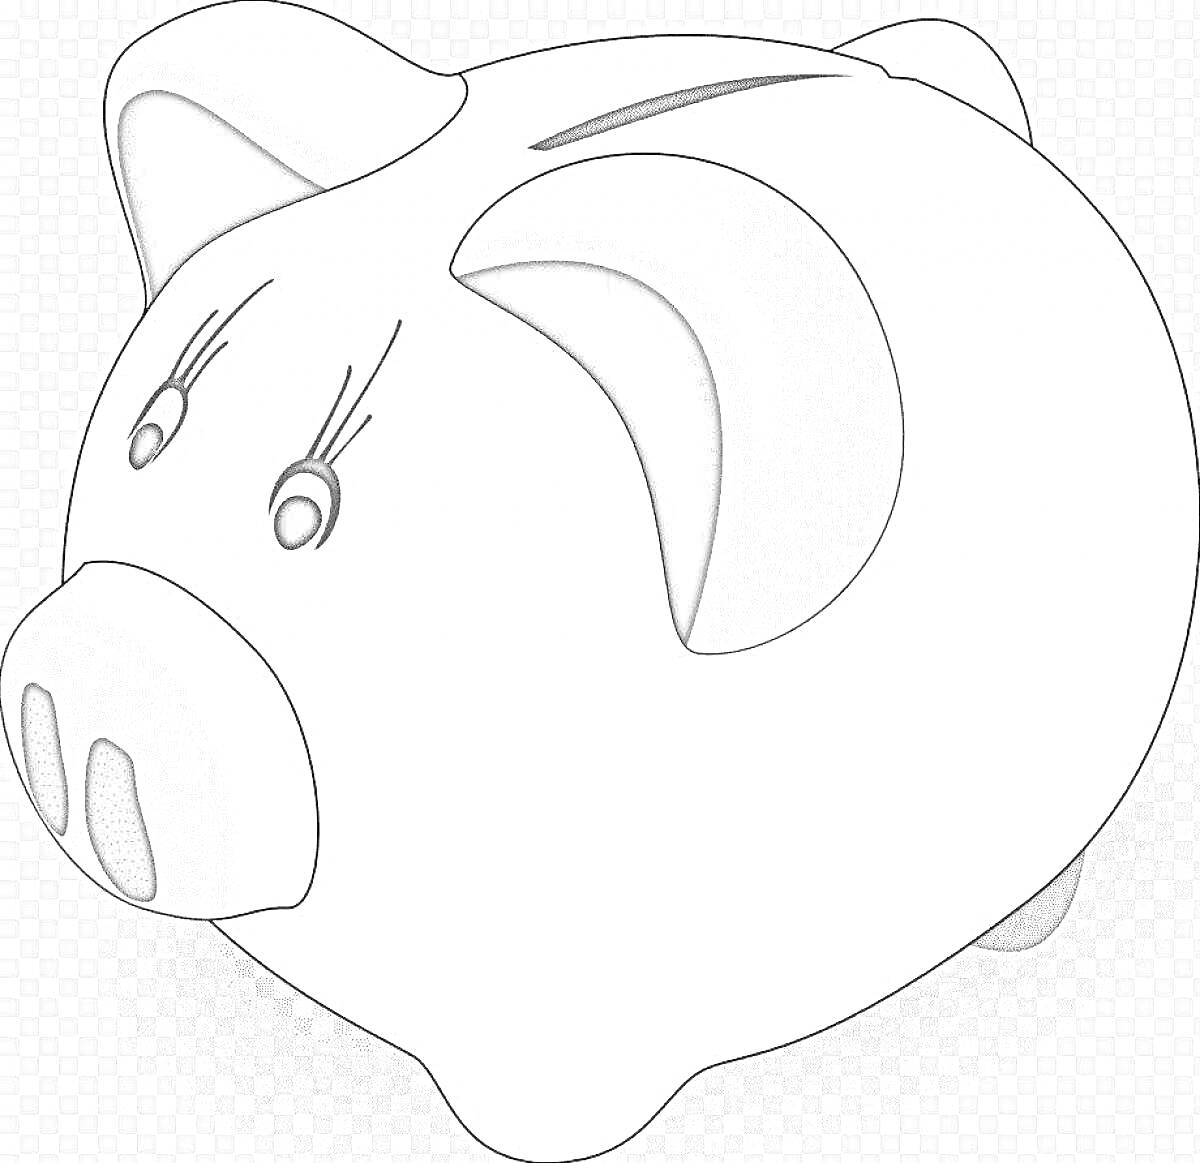 Раскраска Копилка в форме свинки с глазками и ушками, щелка для монет.